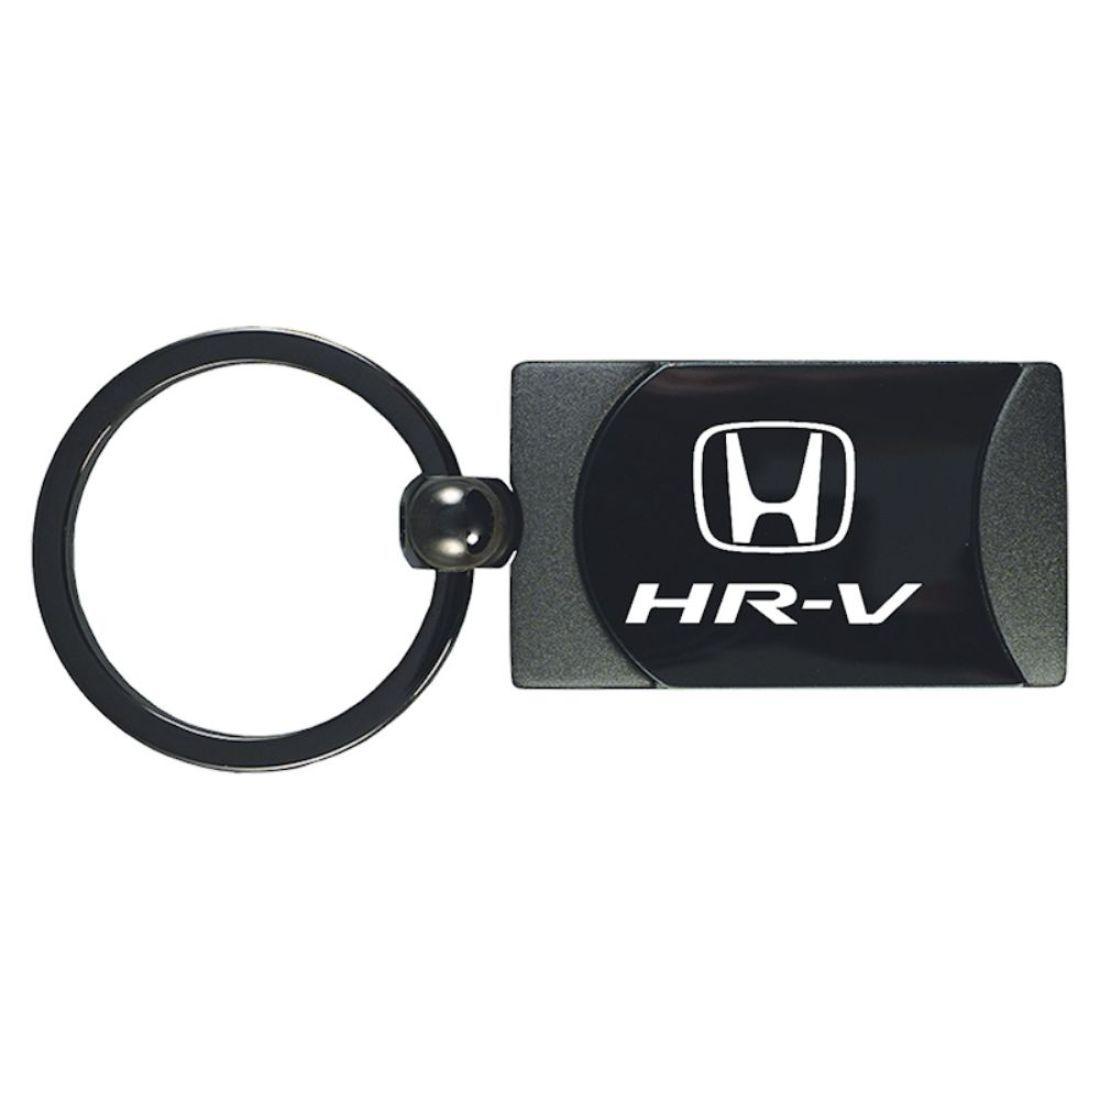 Hr-V Logo - Details about Honda HRV Key Ring Gunmetal Rectangular Keychain